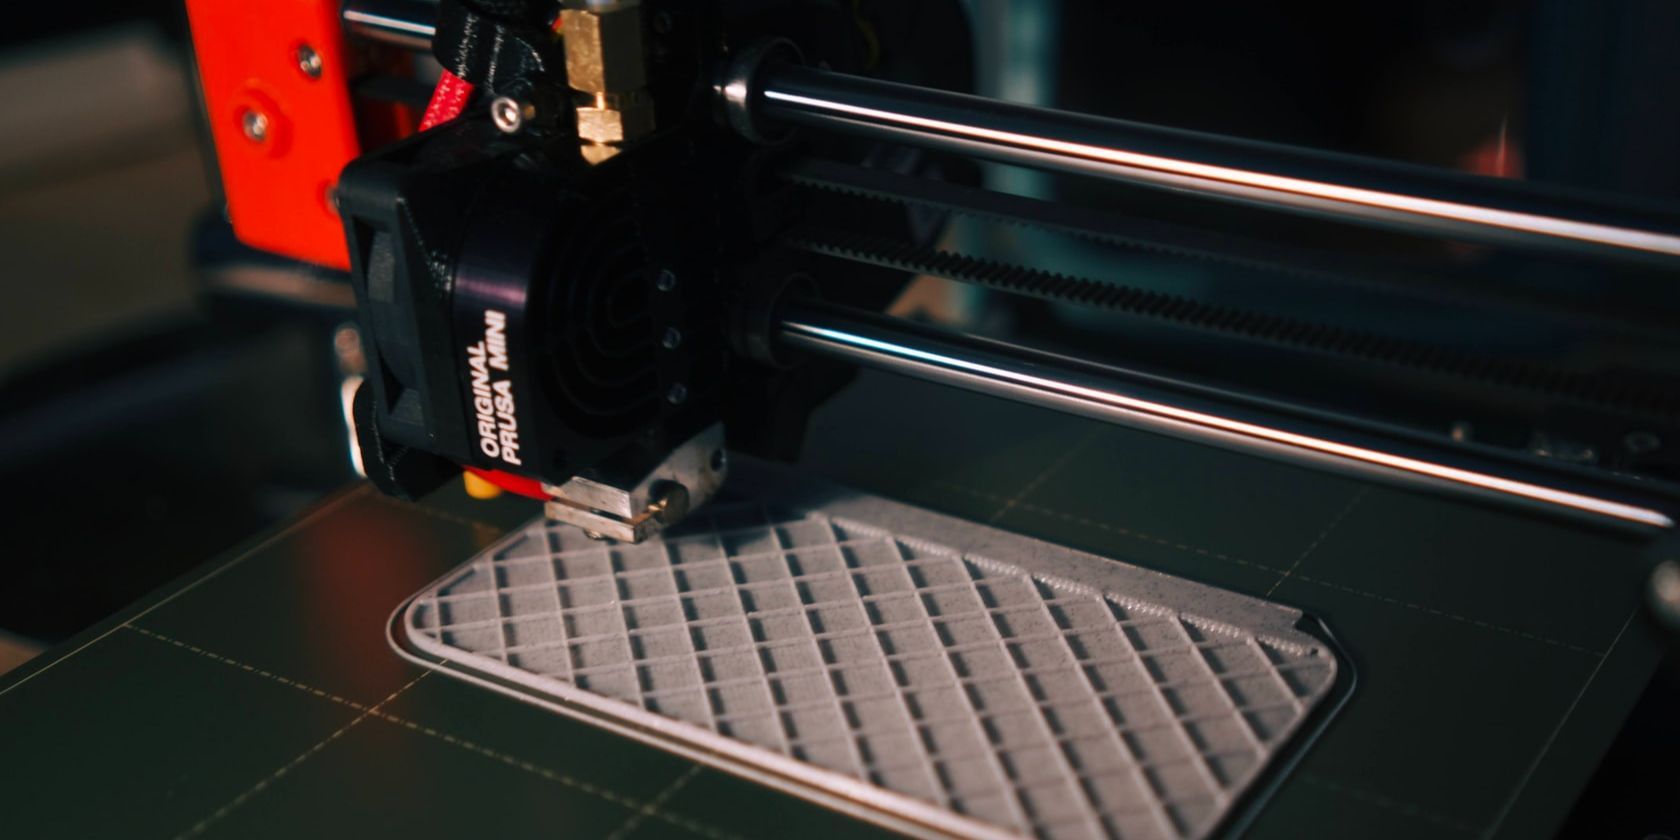 3D Printer Printing a Model